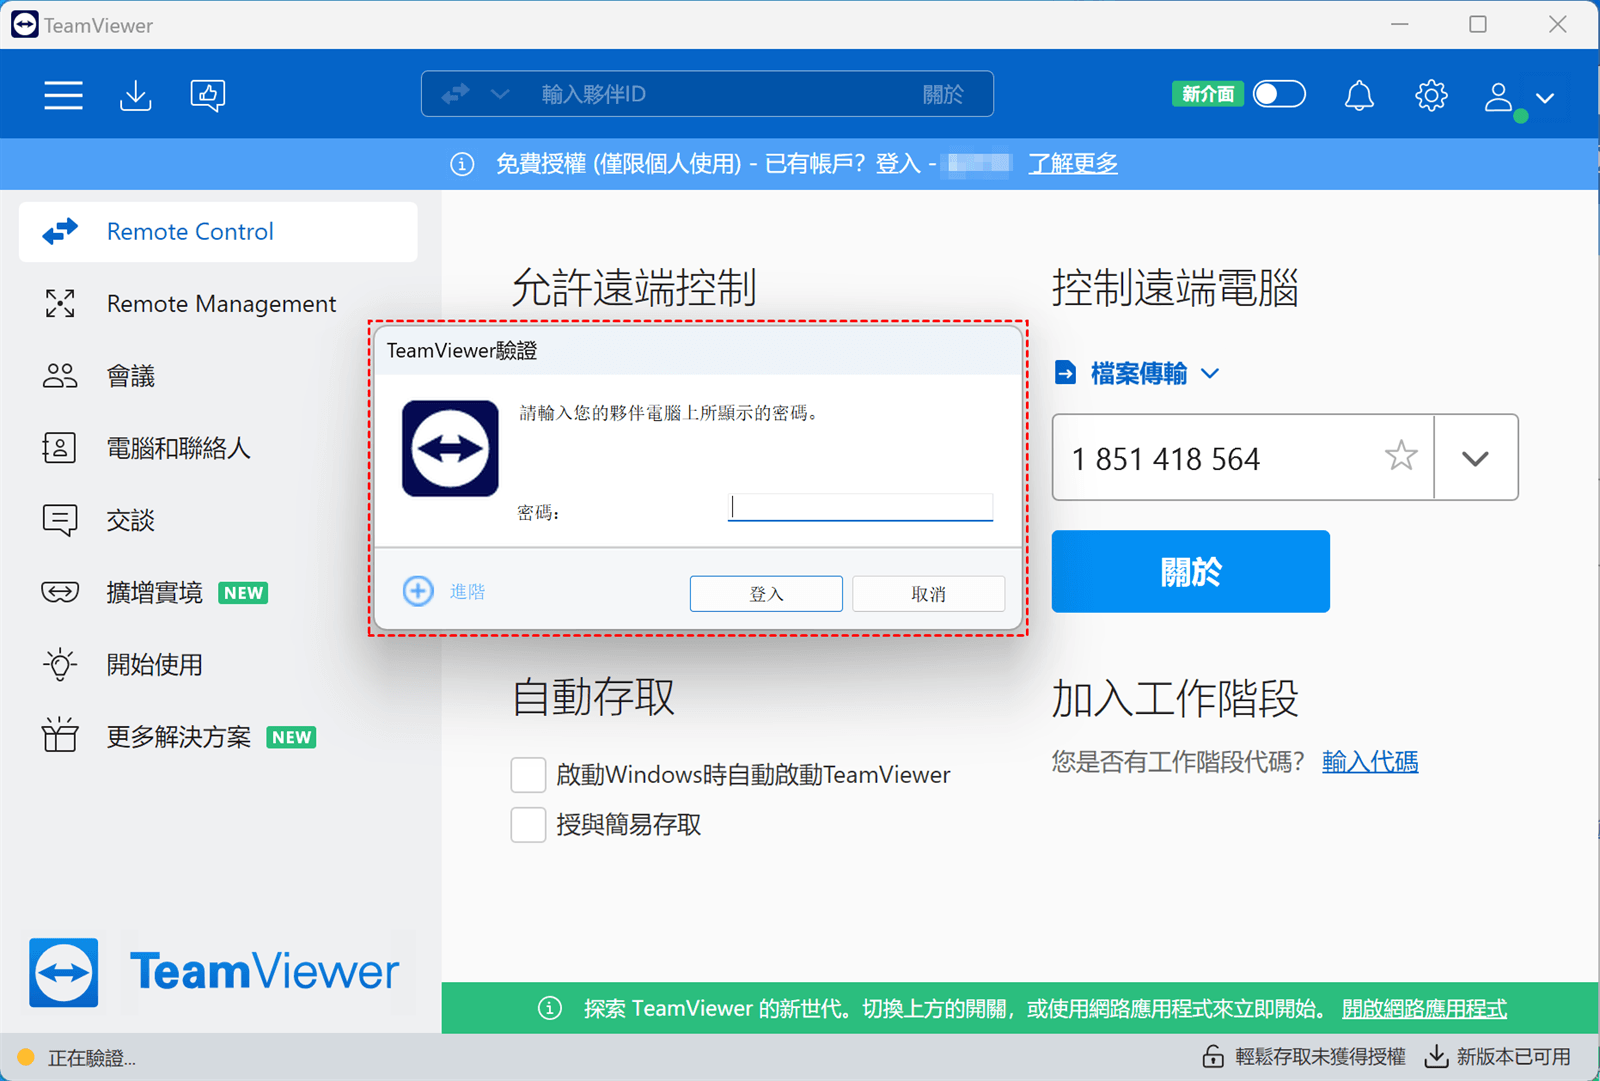 teamviewer-file-transfer-verification